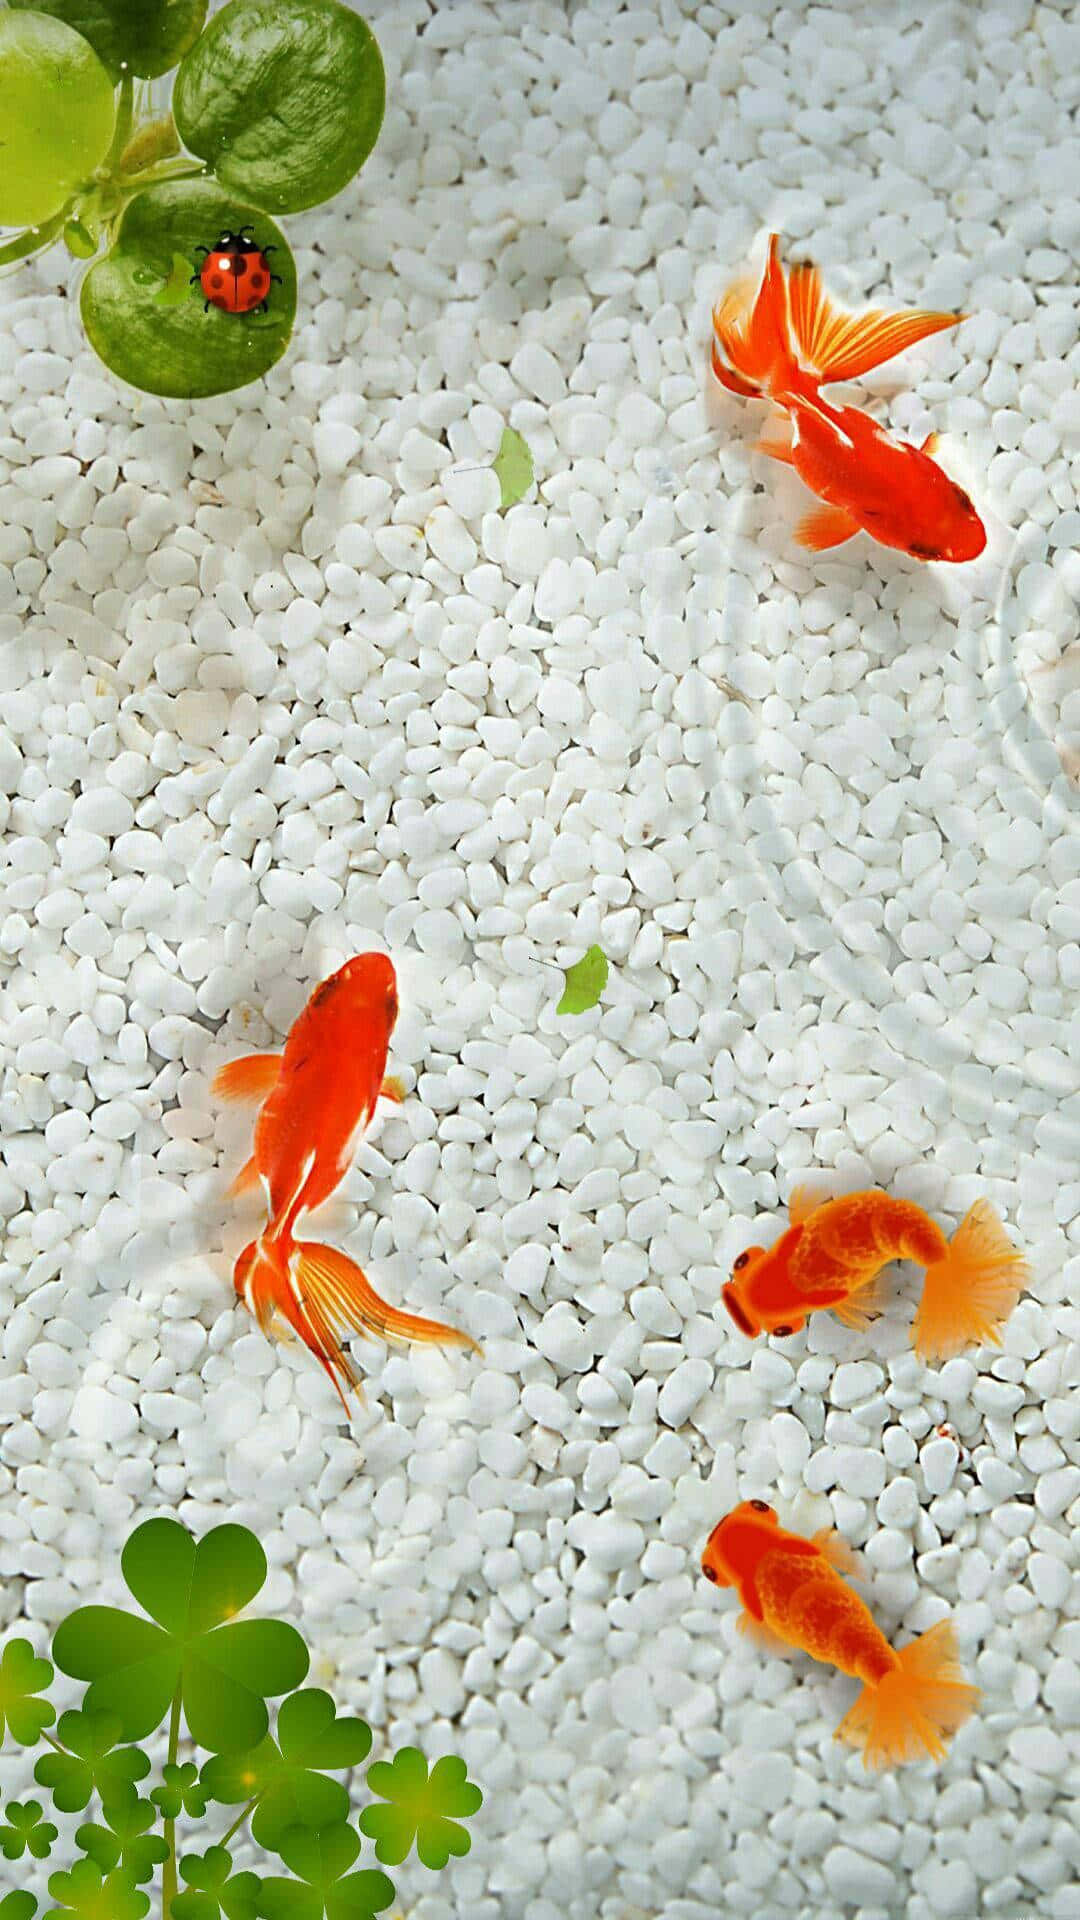 The beauty of a single goldfish